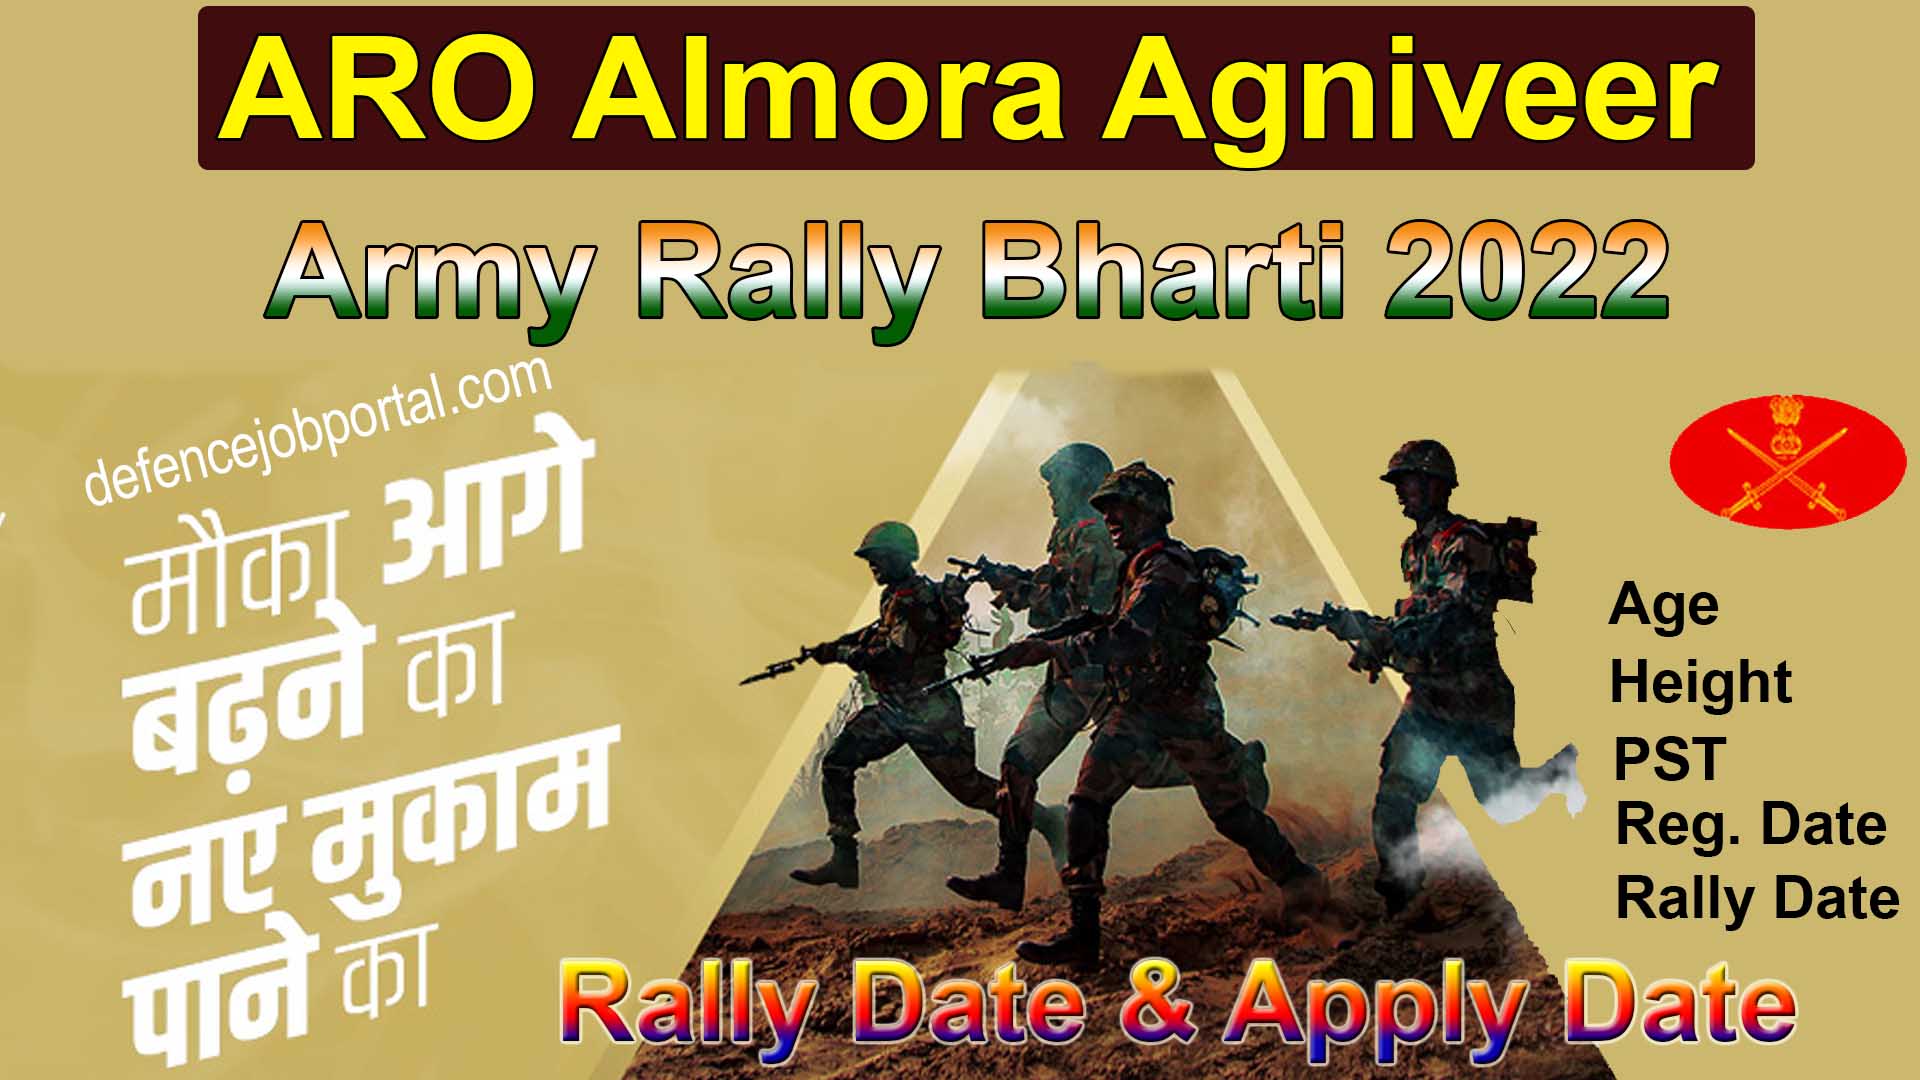 Almora Agniveer Army Rally Bharti 2022